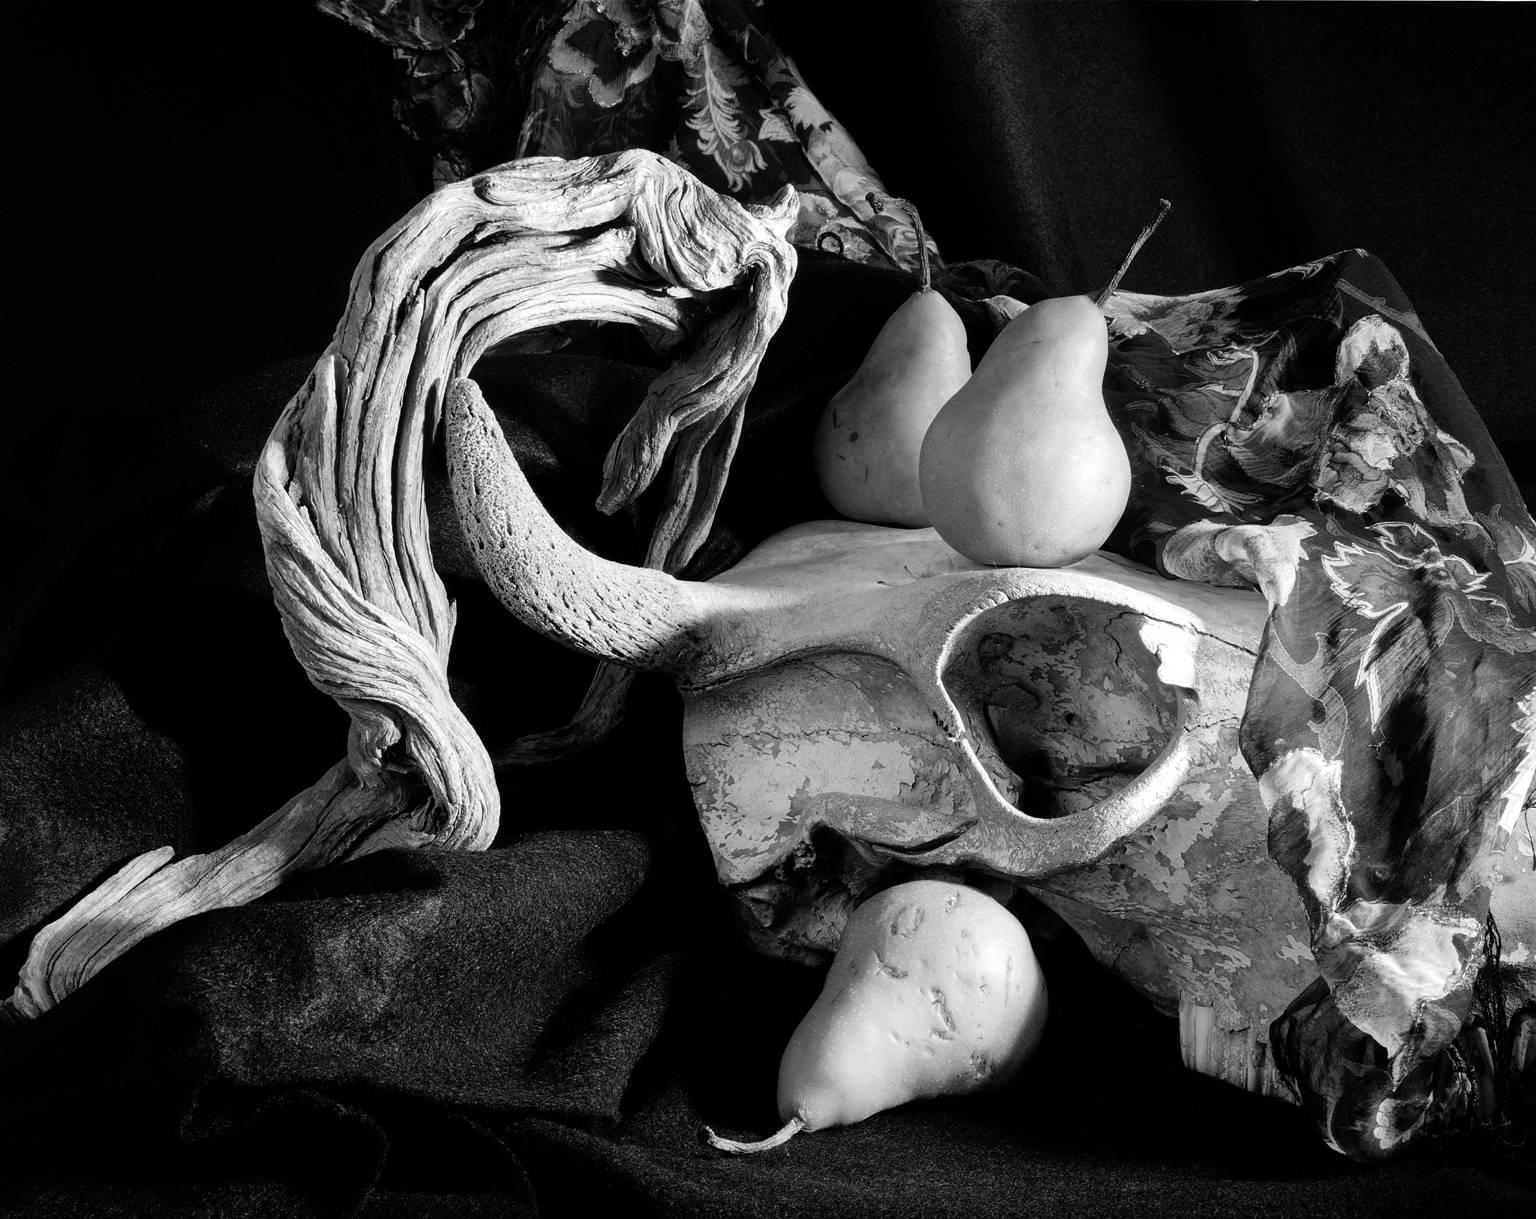 Howard Nathenson Black and White Photograph - "Driftwood, Skull, Pears", digital black and white still life photograph